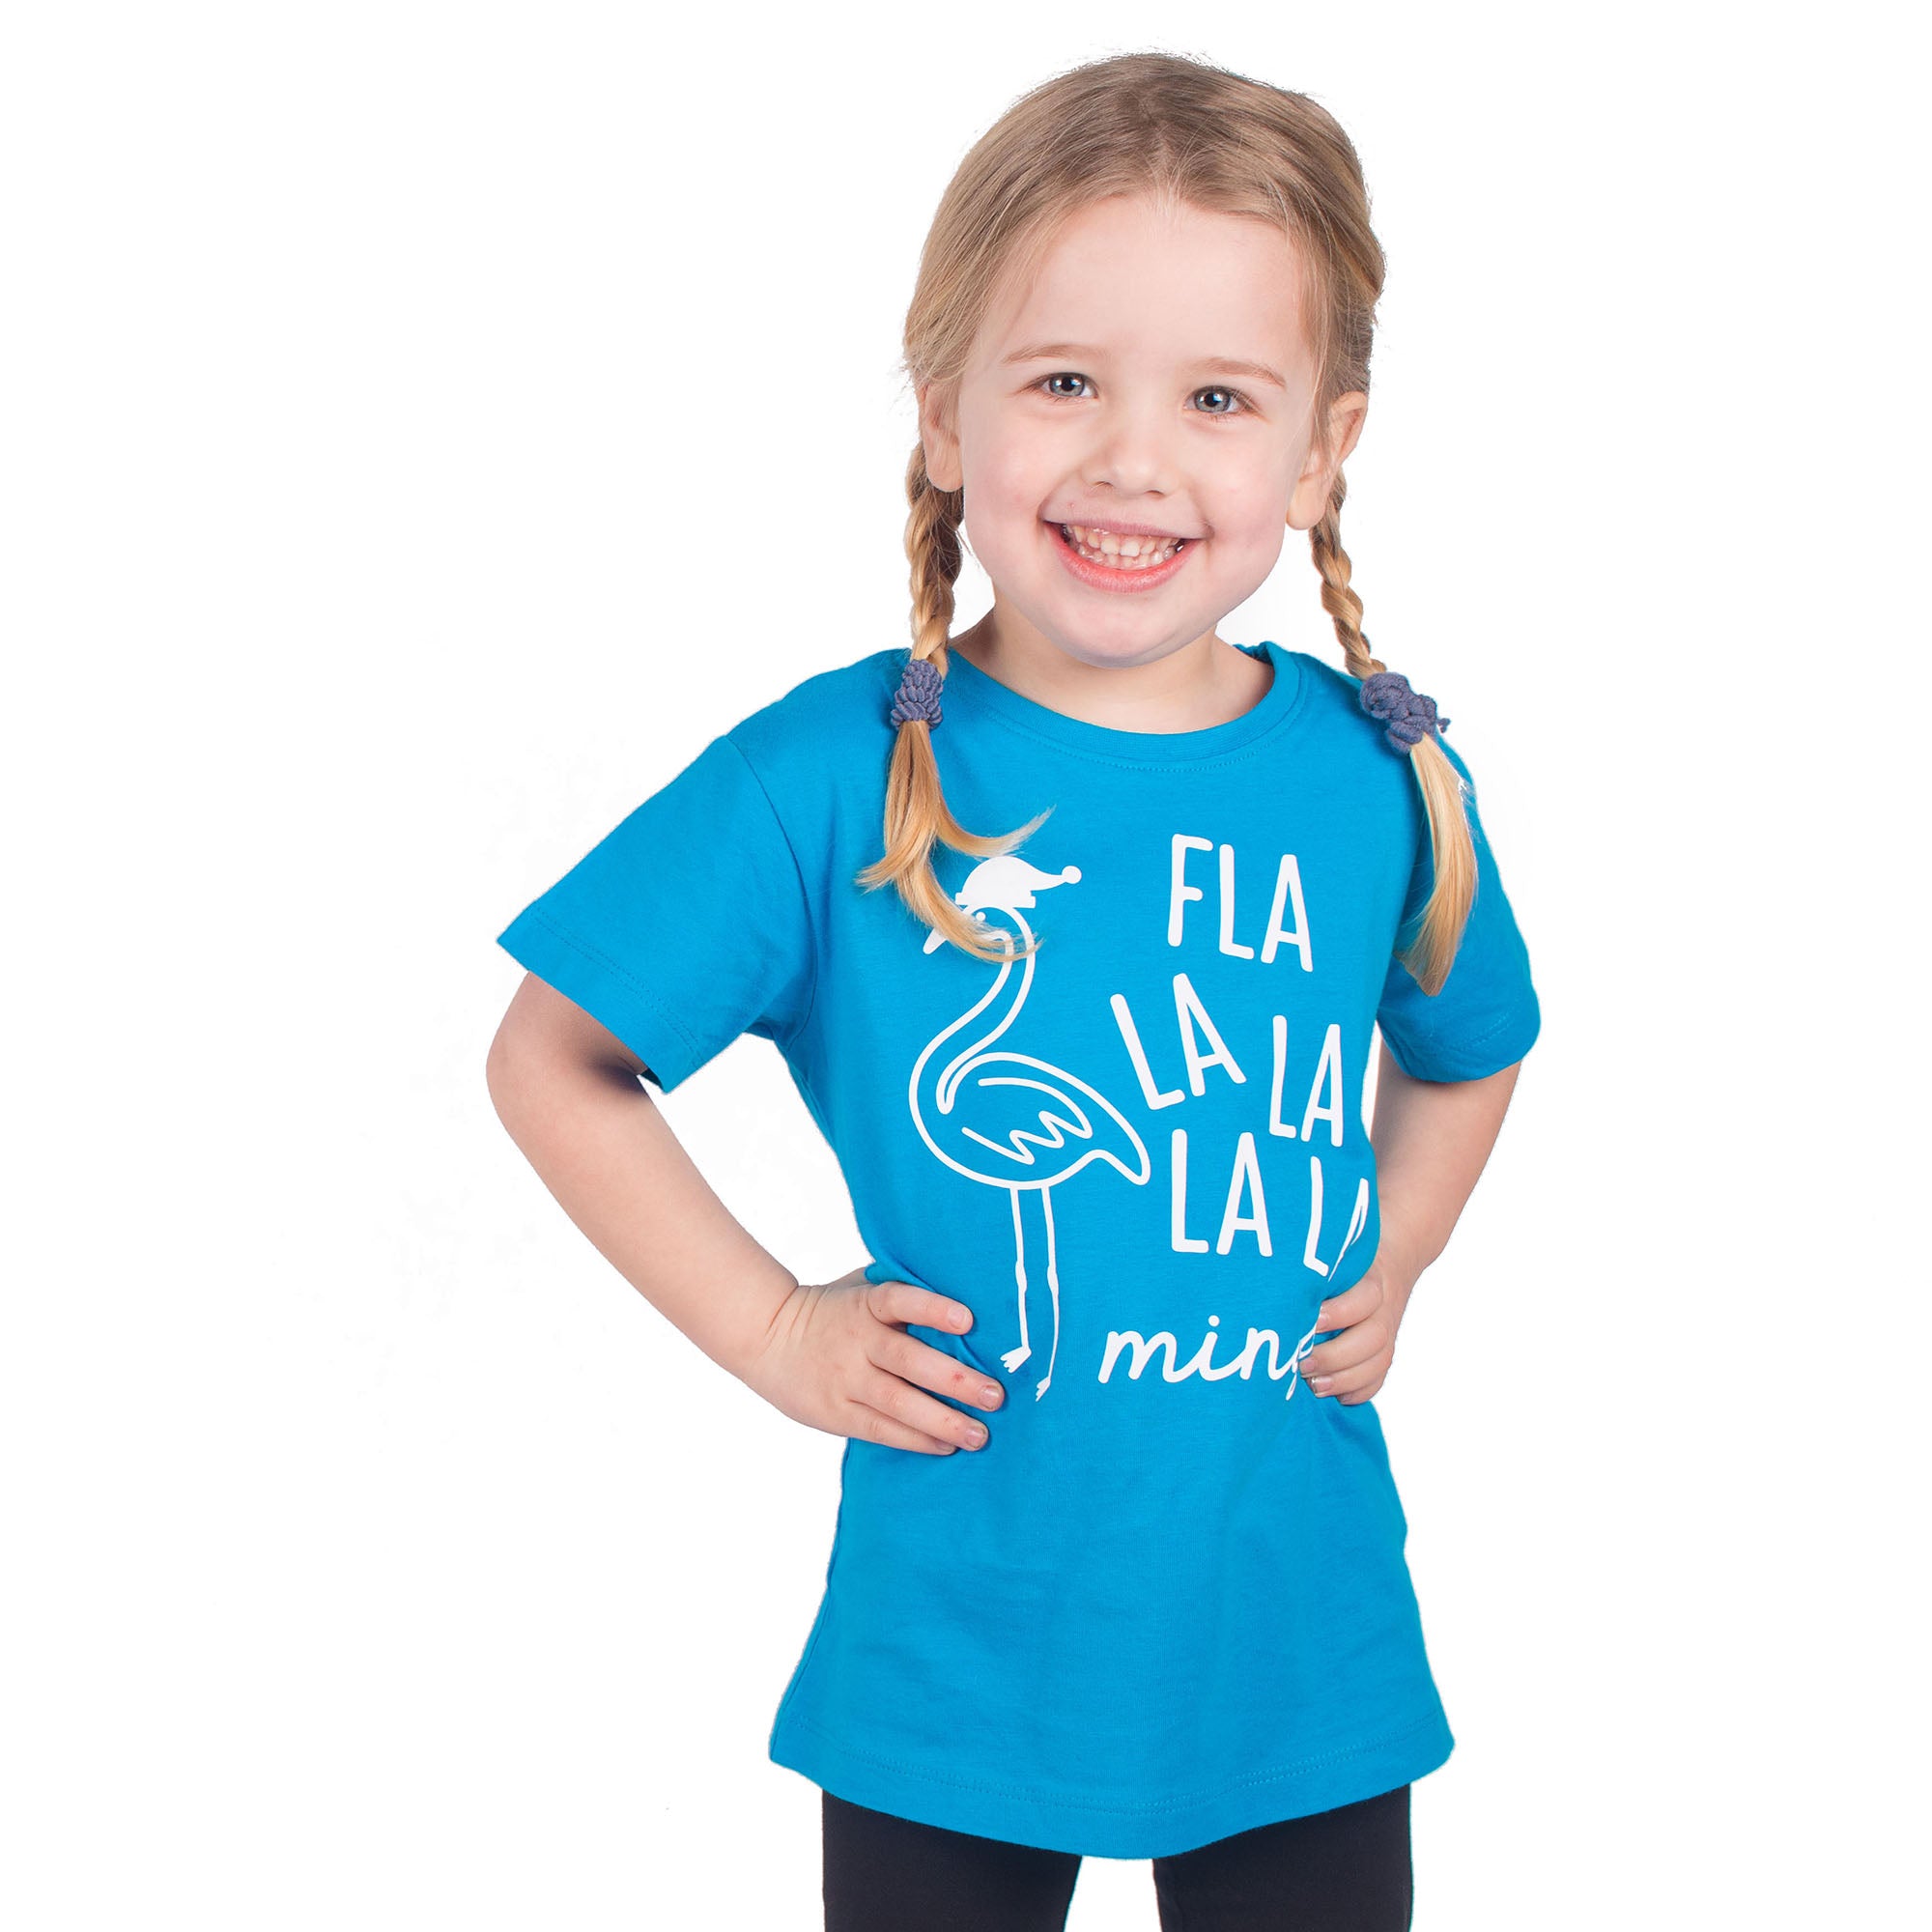 Smiling blonde girl with pigtails wearing aqua shirt with 'Fla la la la la mingo' print by KMLeon.